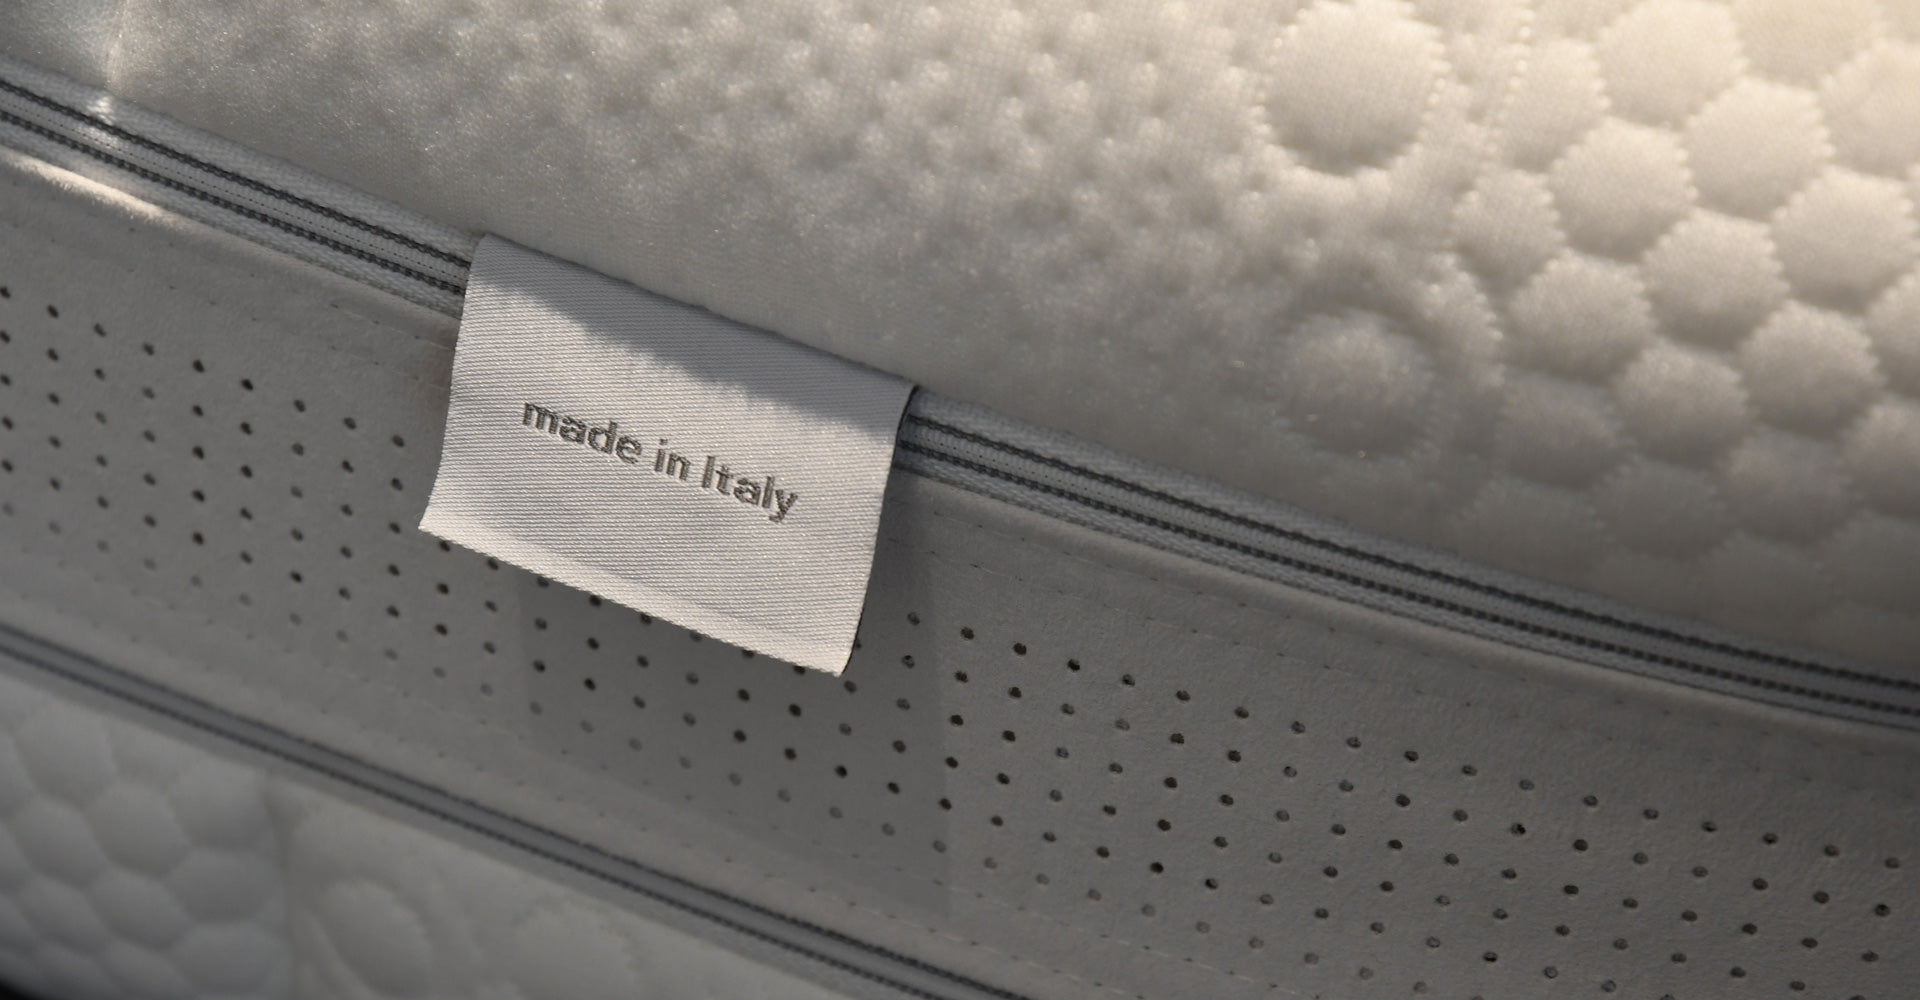 Made in Italy label in Dorelan mattress